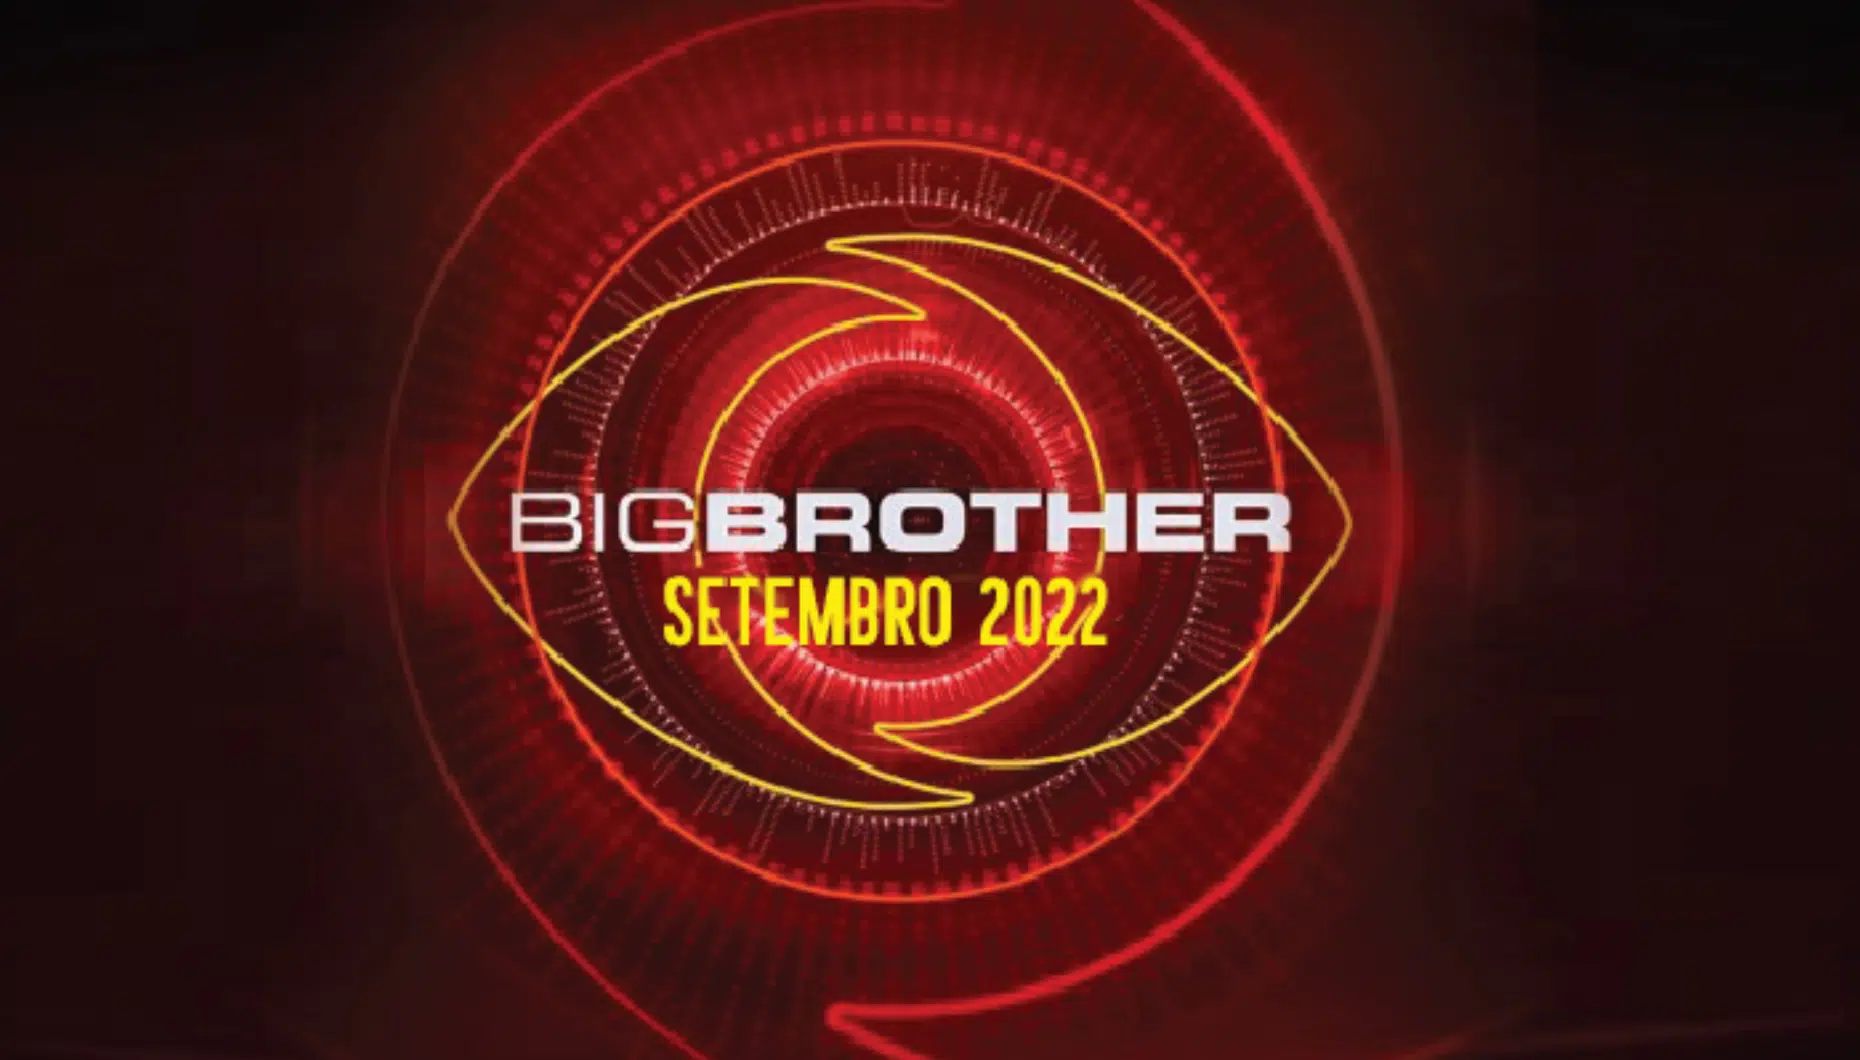 Big Brother, Logo